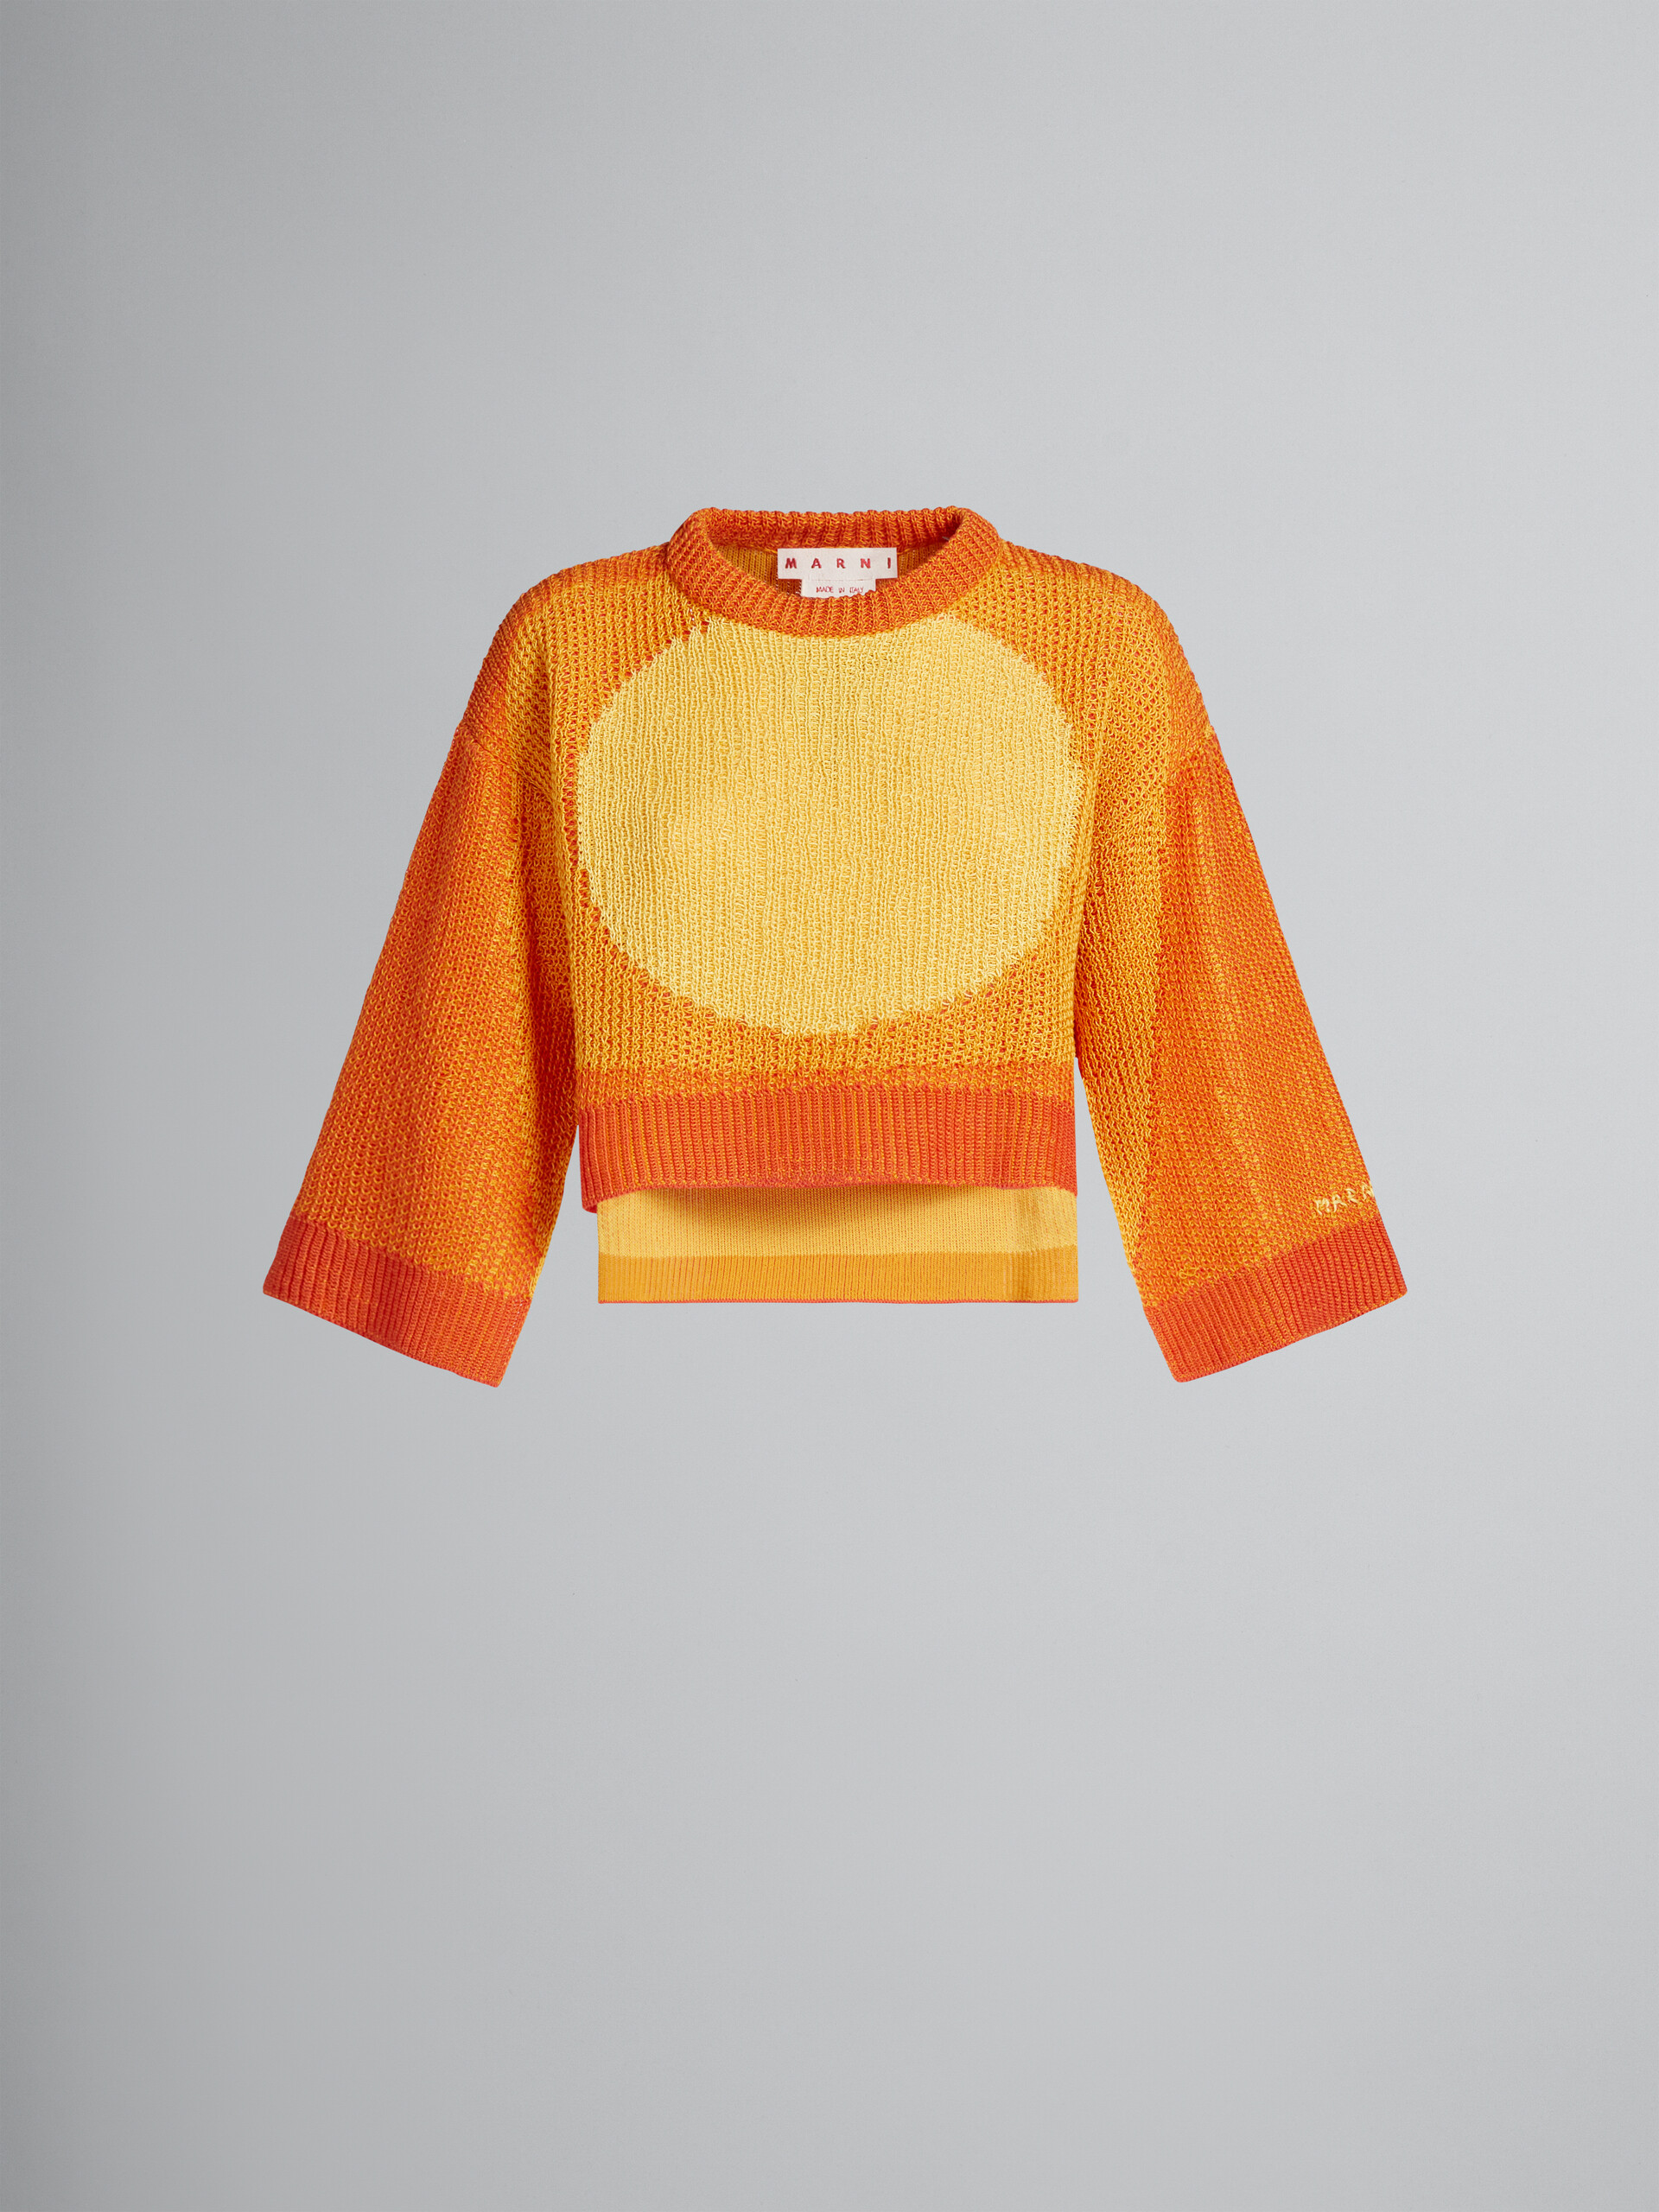 Orange jumper with kimono sleeves - Pullovers - Image 1